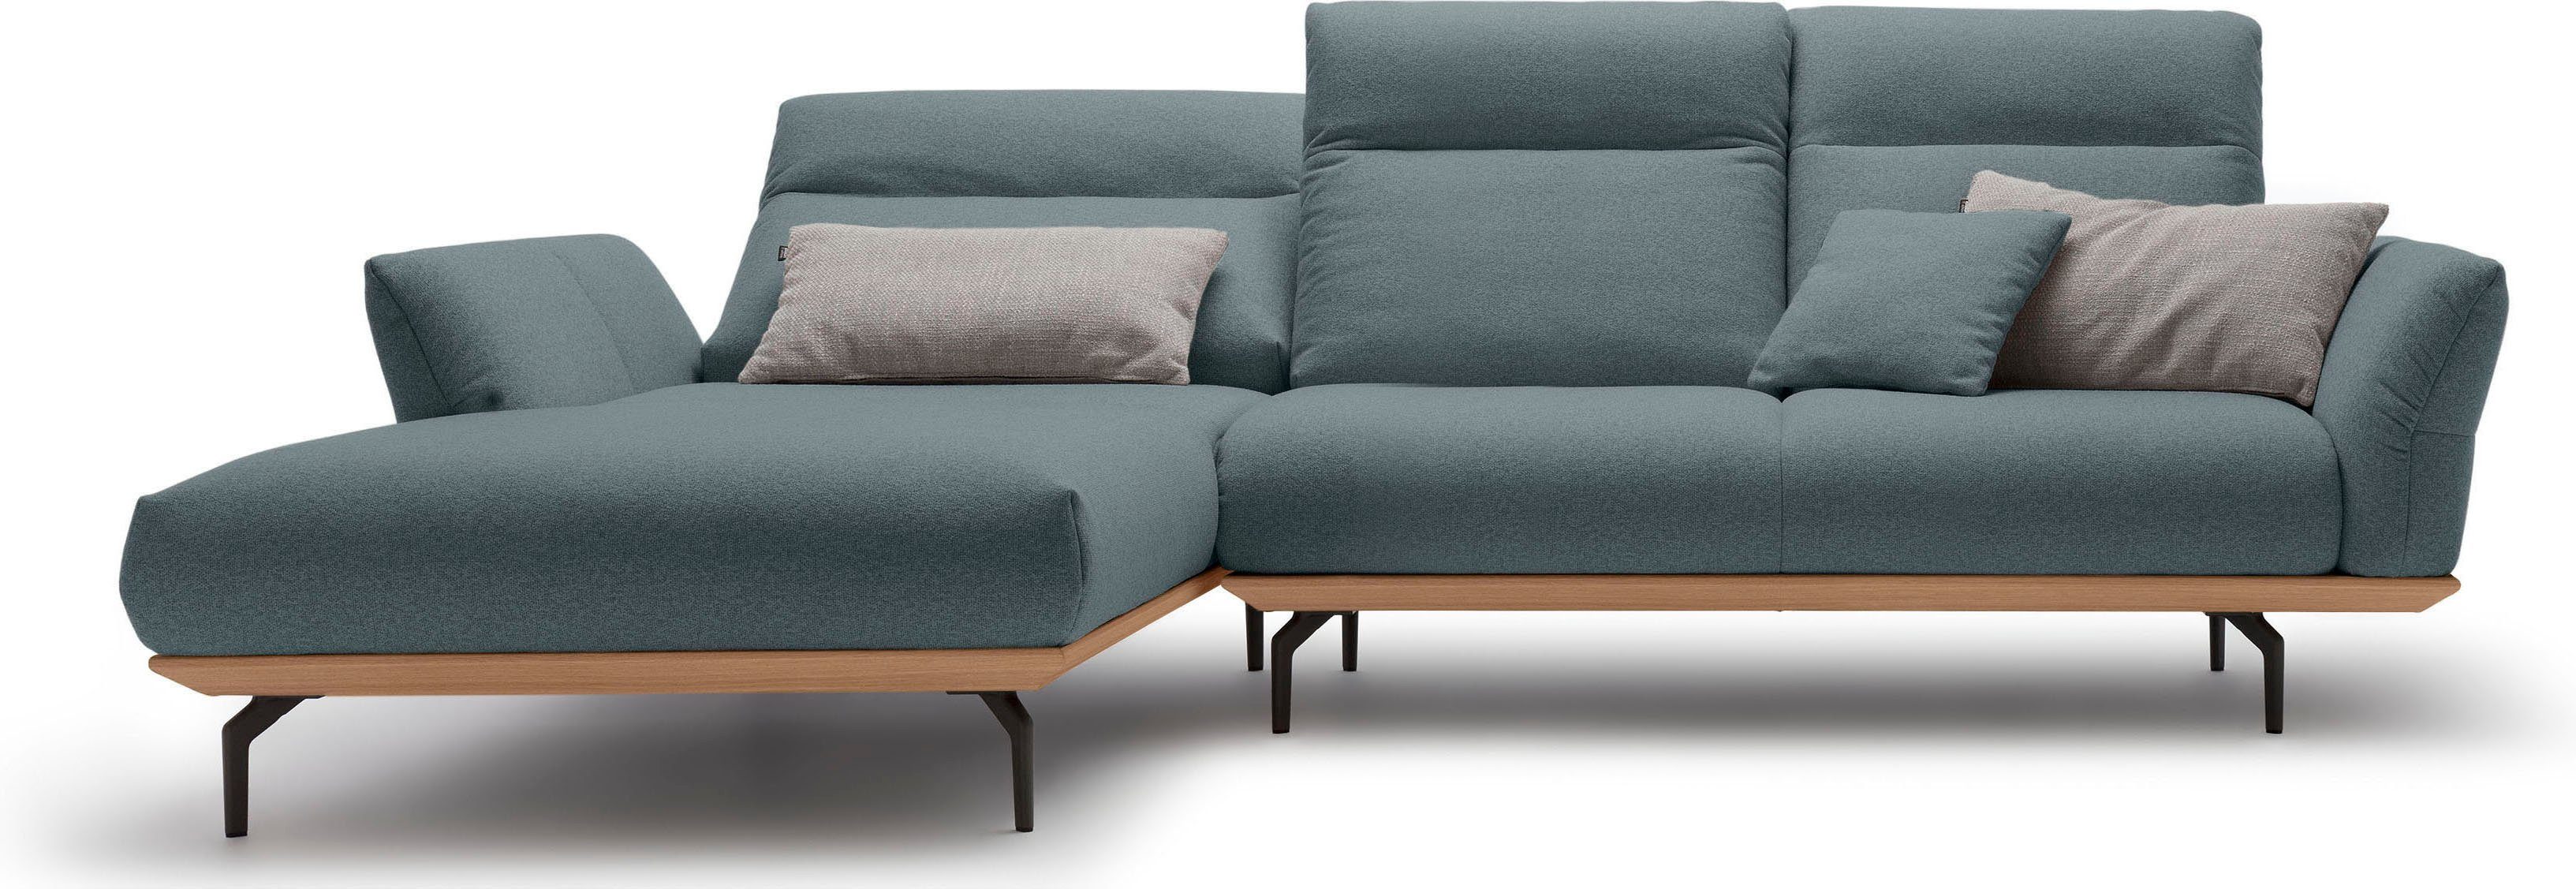 hülsta sofa Ecksofa hs.460, Sockel in Eiche, Alugussfüße in umbragrau, Breite 298 cm | Ecksofas